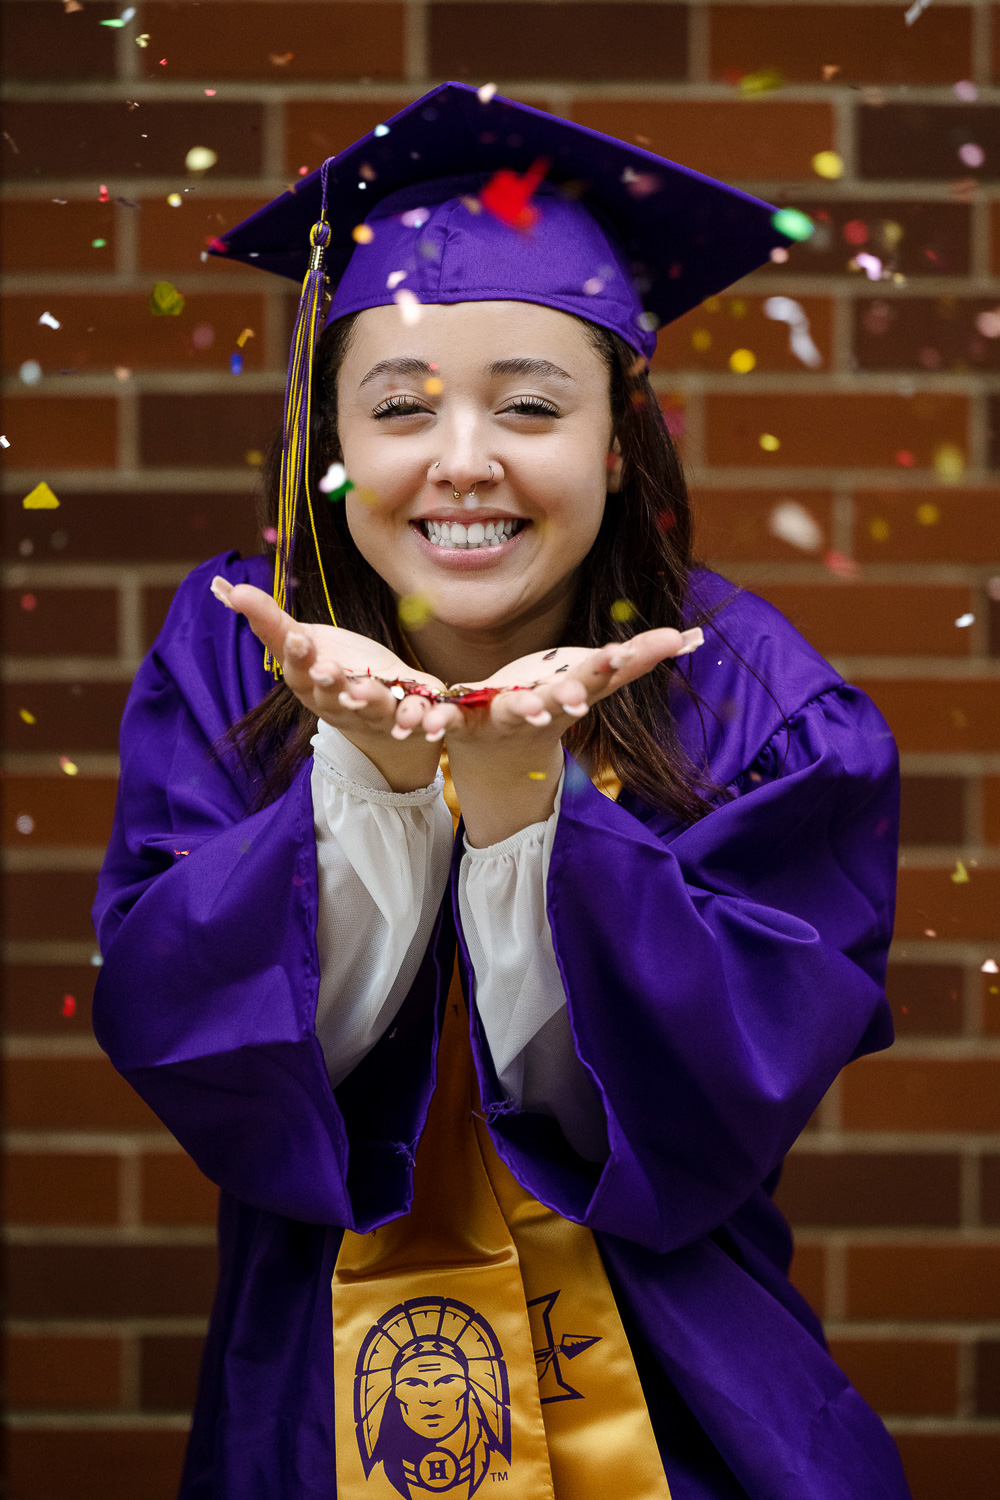 Hallsville high school senior girl blows confetti at camera wearing purple graduation gown and cap